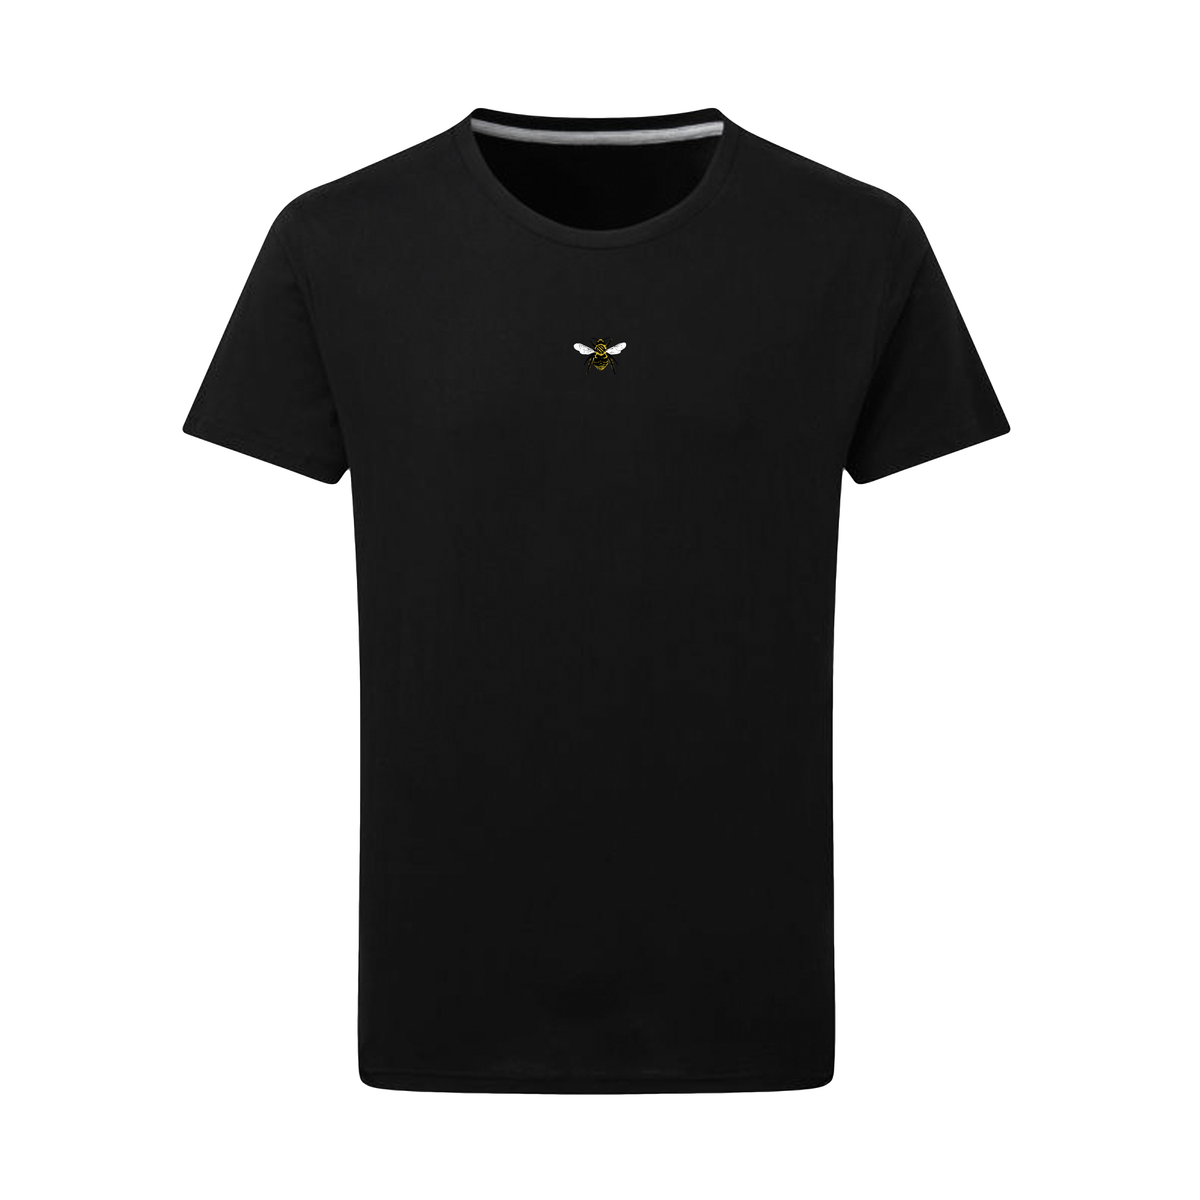 Bee Manc Bee T-Shirt - Black